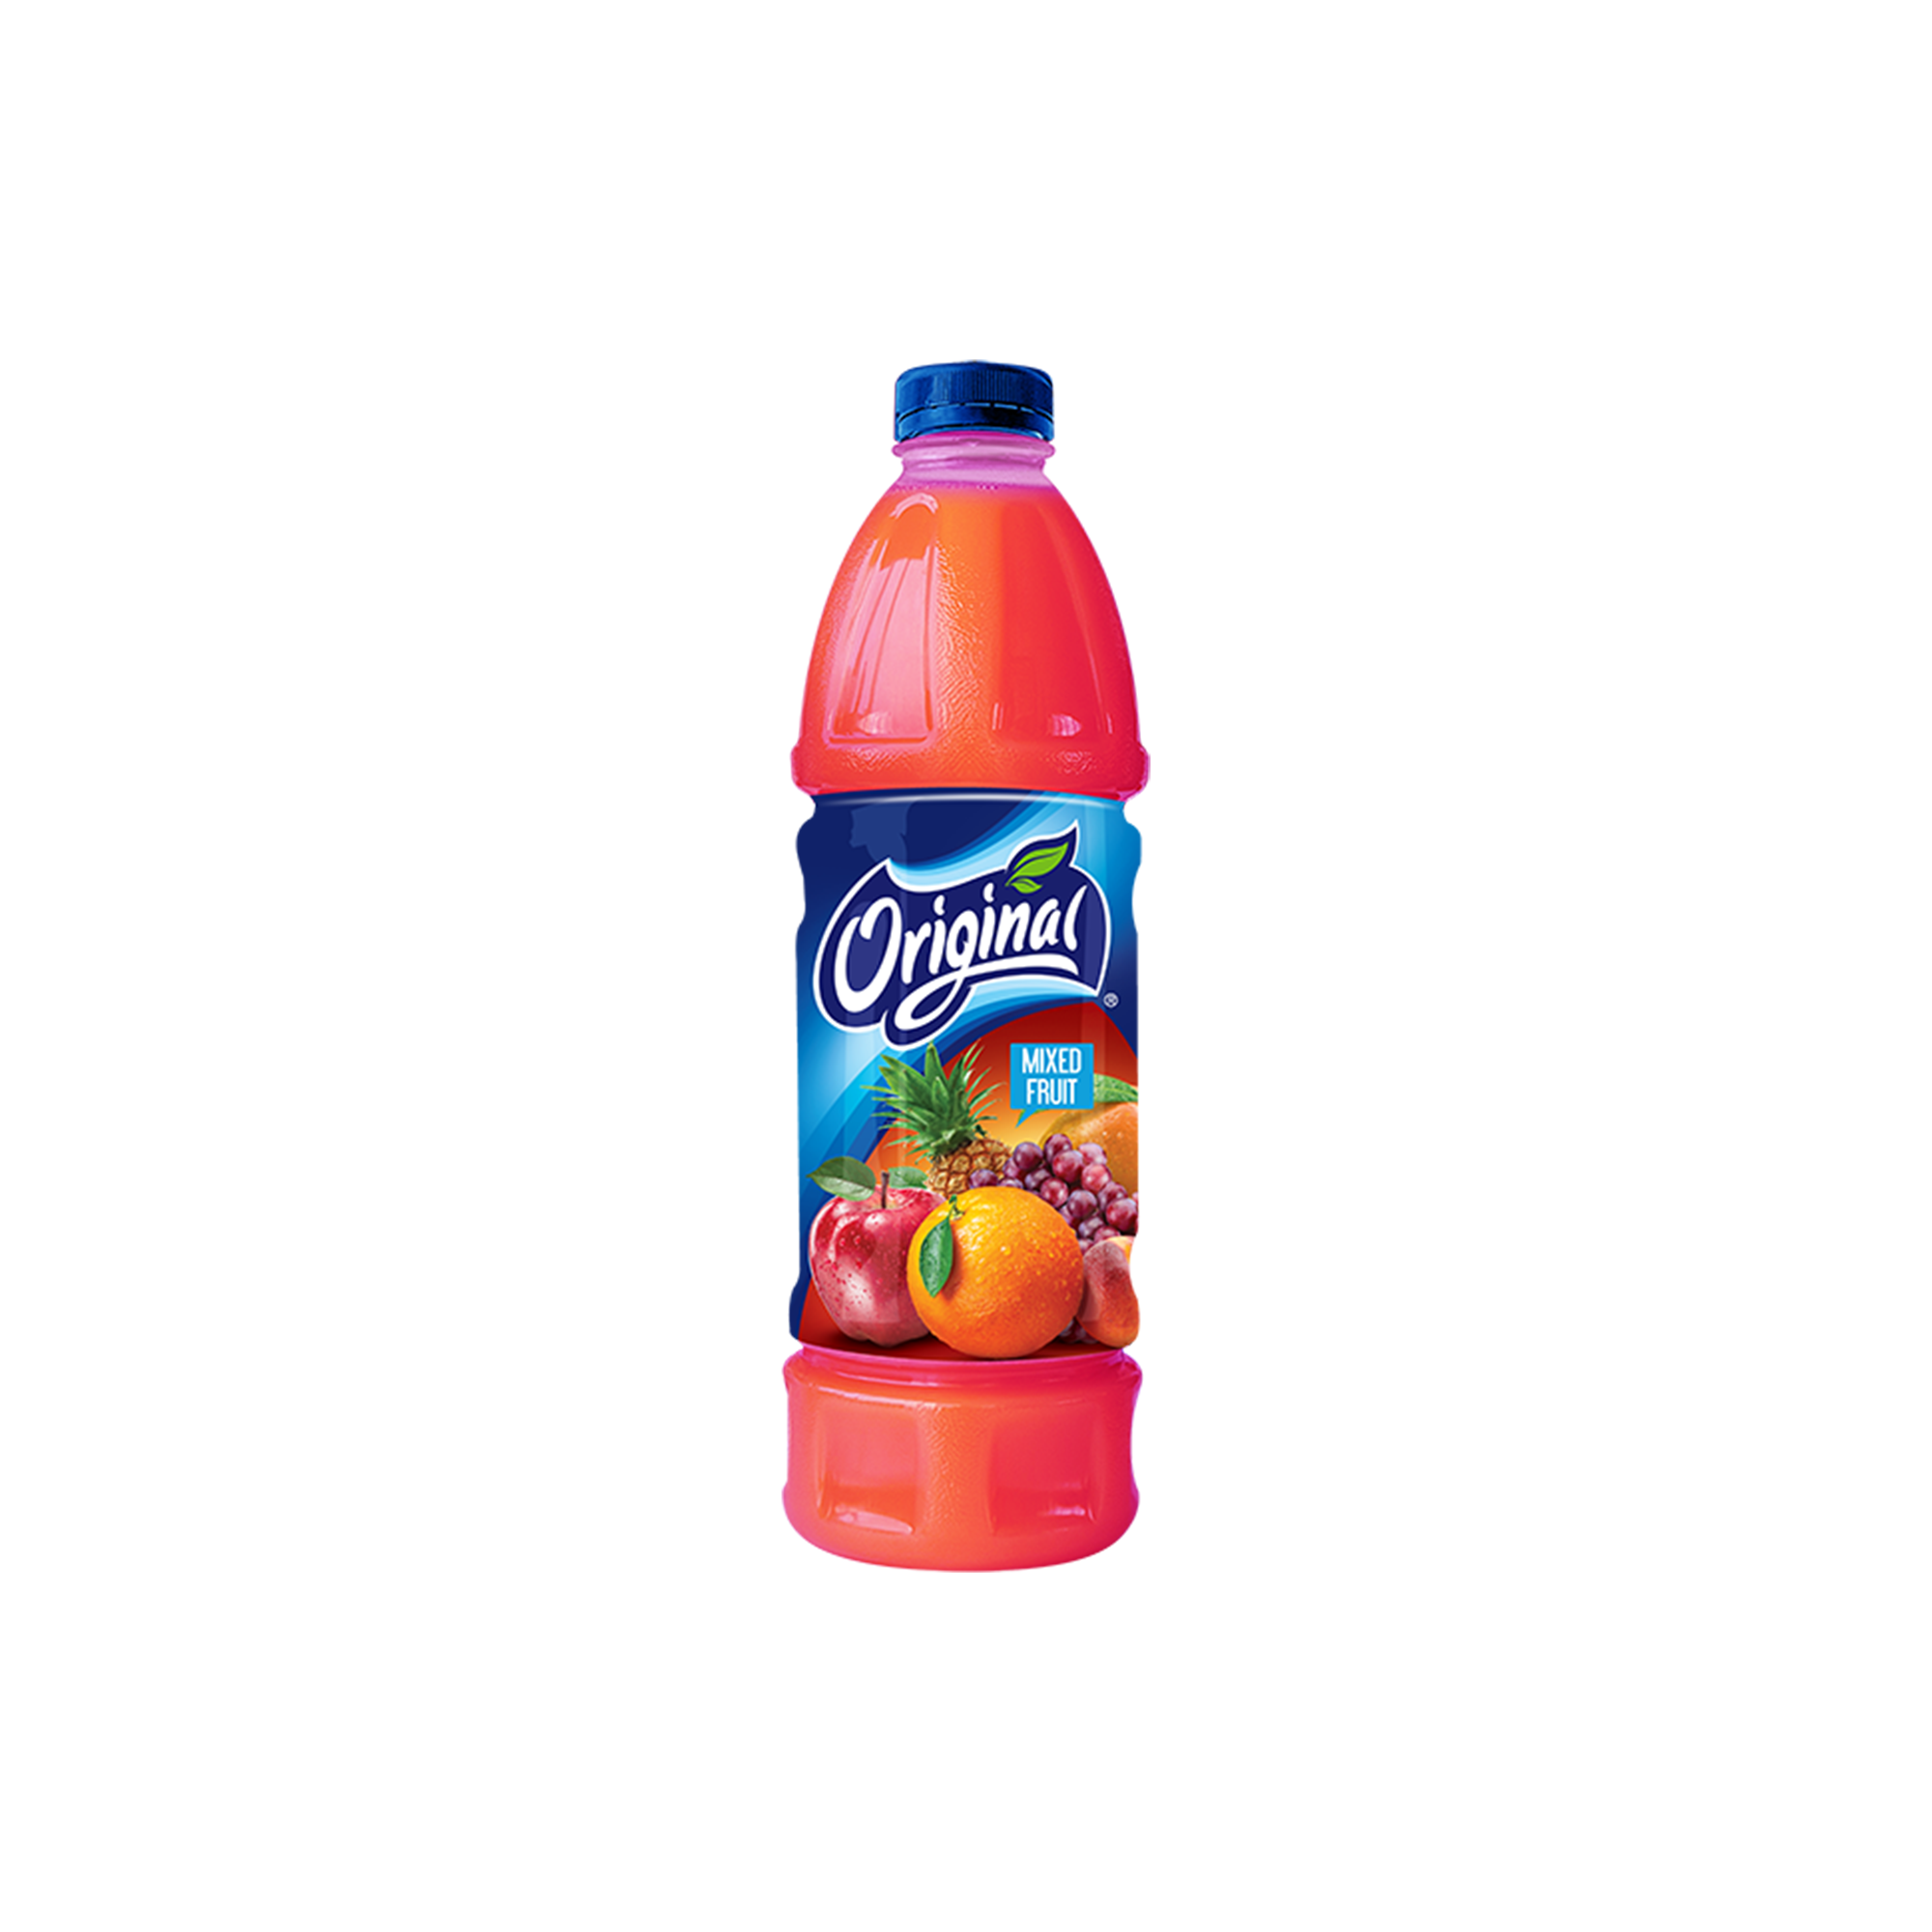 Original Mixfruit Drink 1.4Ltr